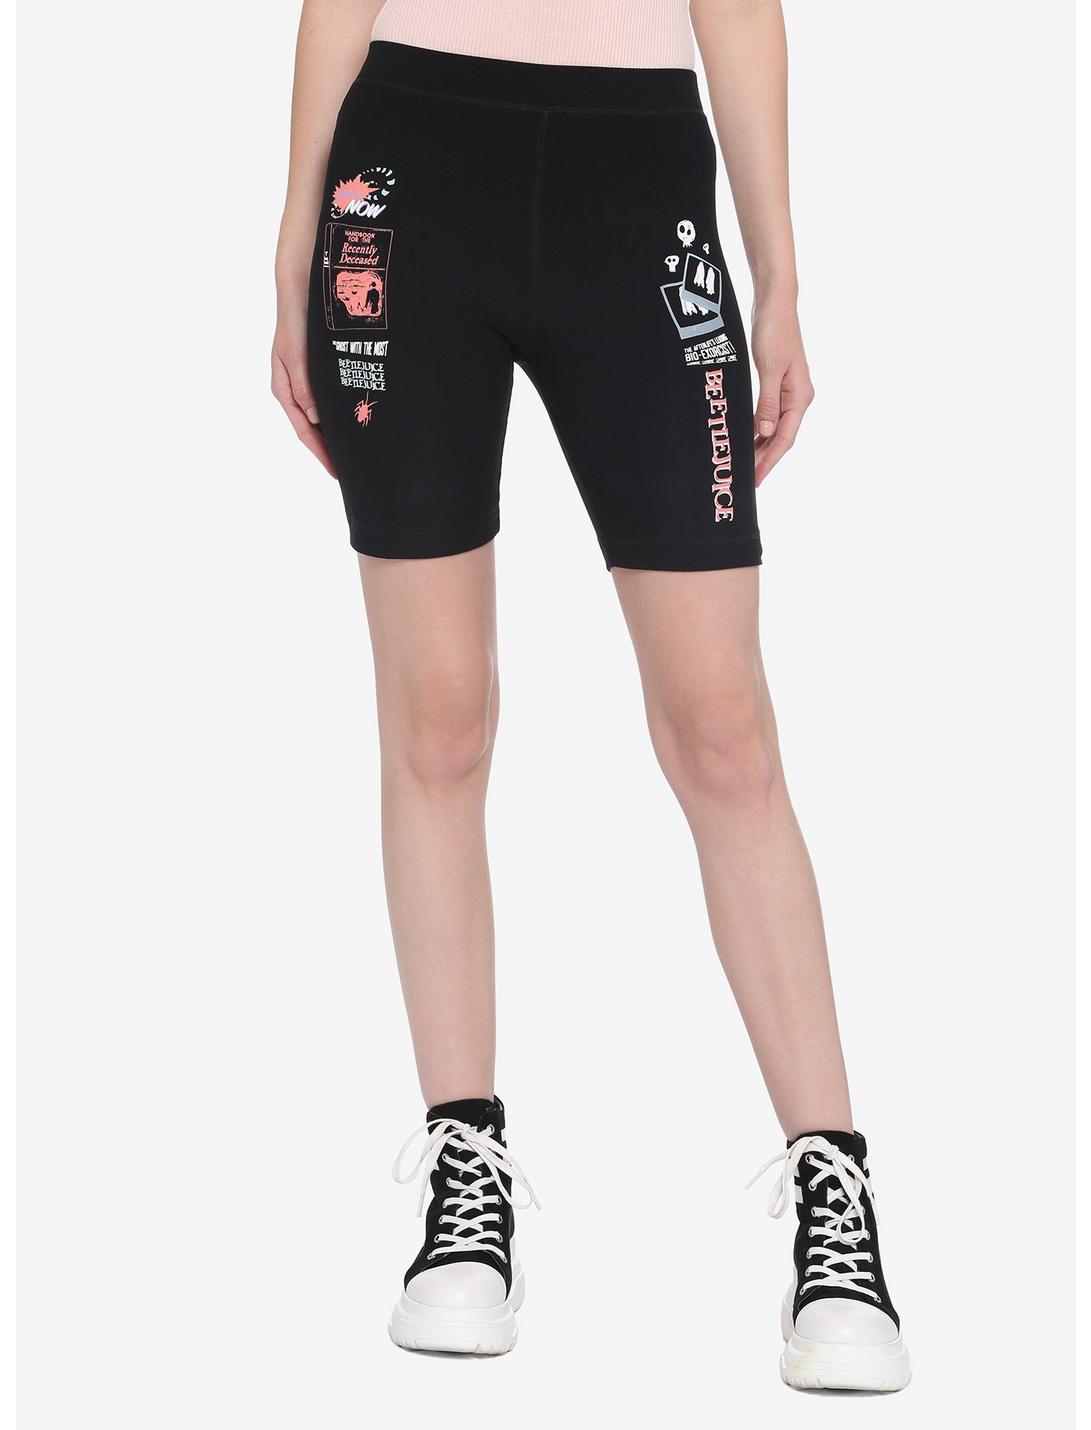 Beetlejuice Icons Biker Shorts, MULTI, hi-res